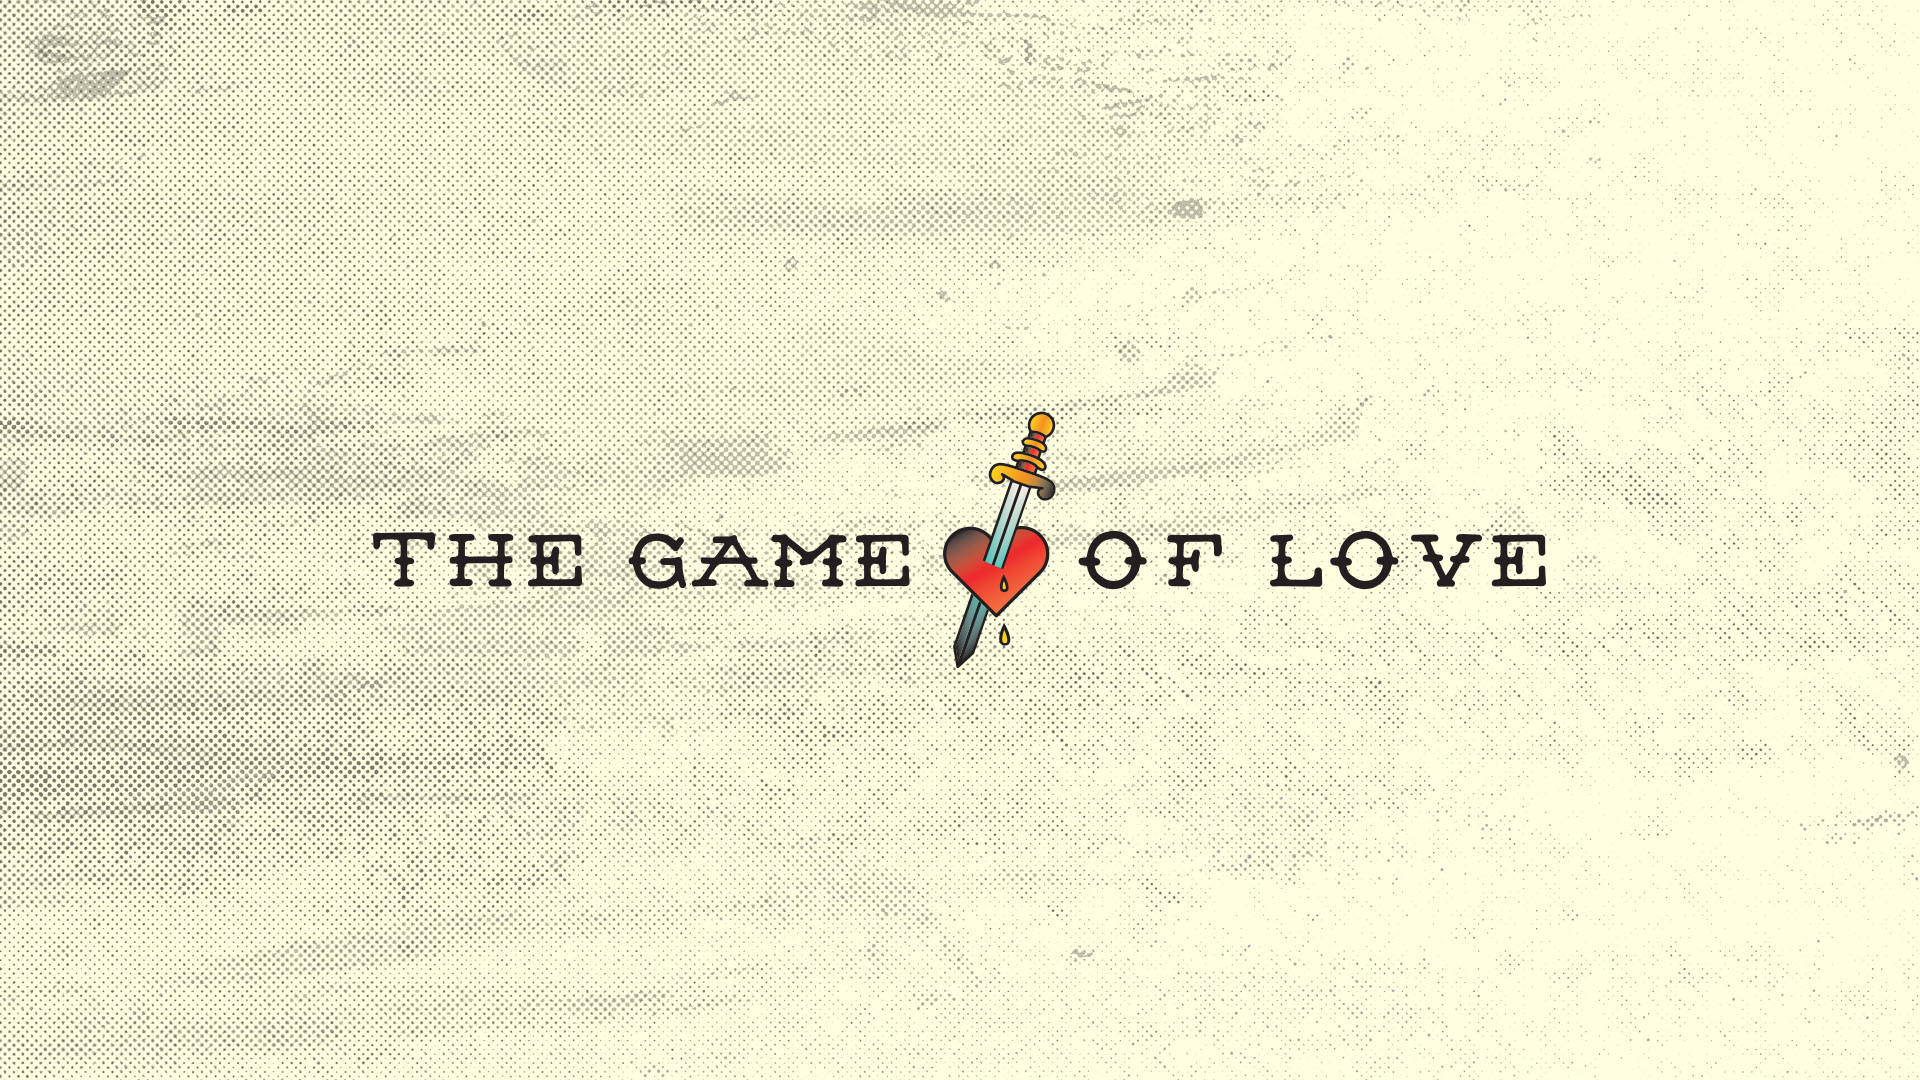 “Game of Love”: Μετά την παρέμβαση του εισαγγελέα, επικρατεί σήμερα πανικός στον ΑΝΤ1!